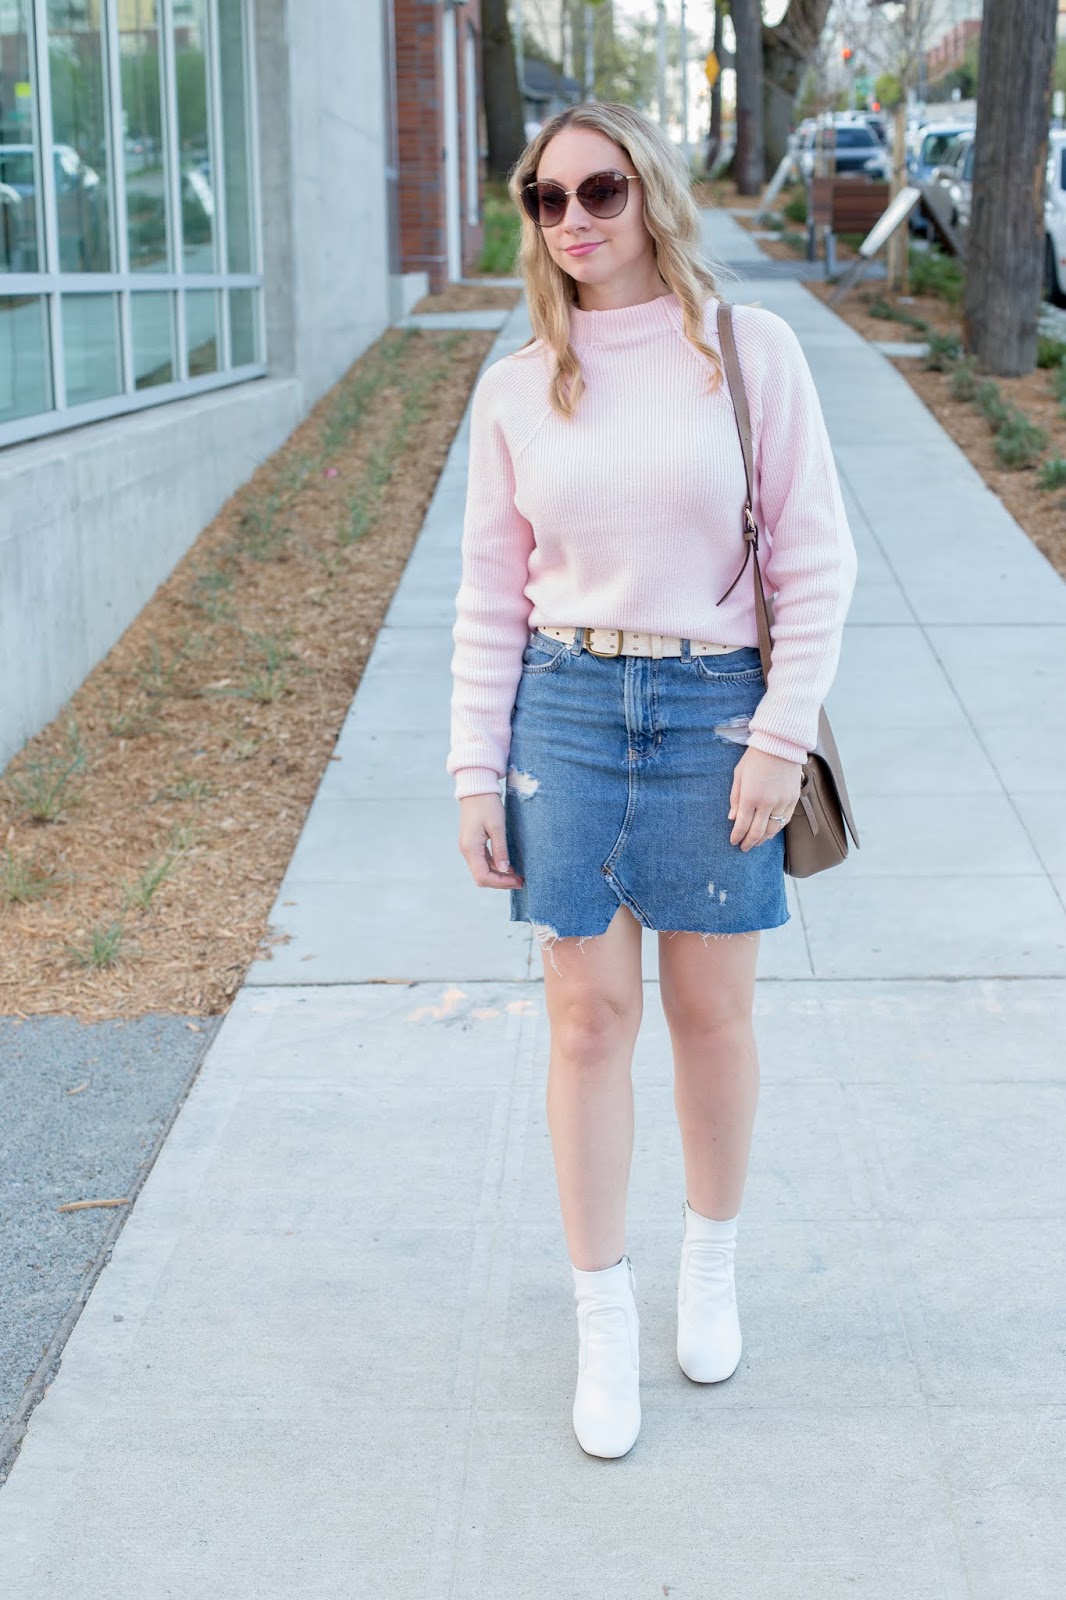 Spring Style: Denim Skirt + White Ankle Boots